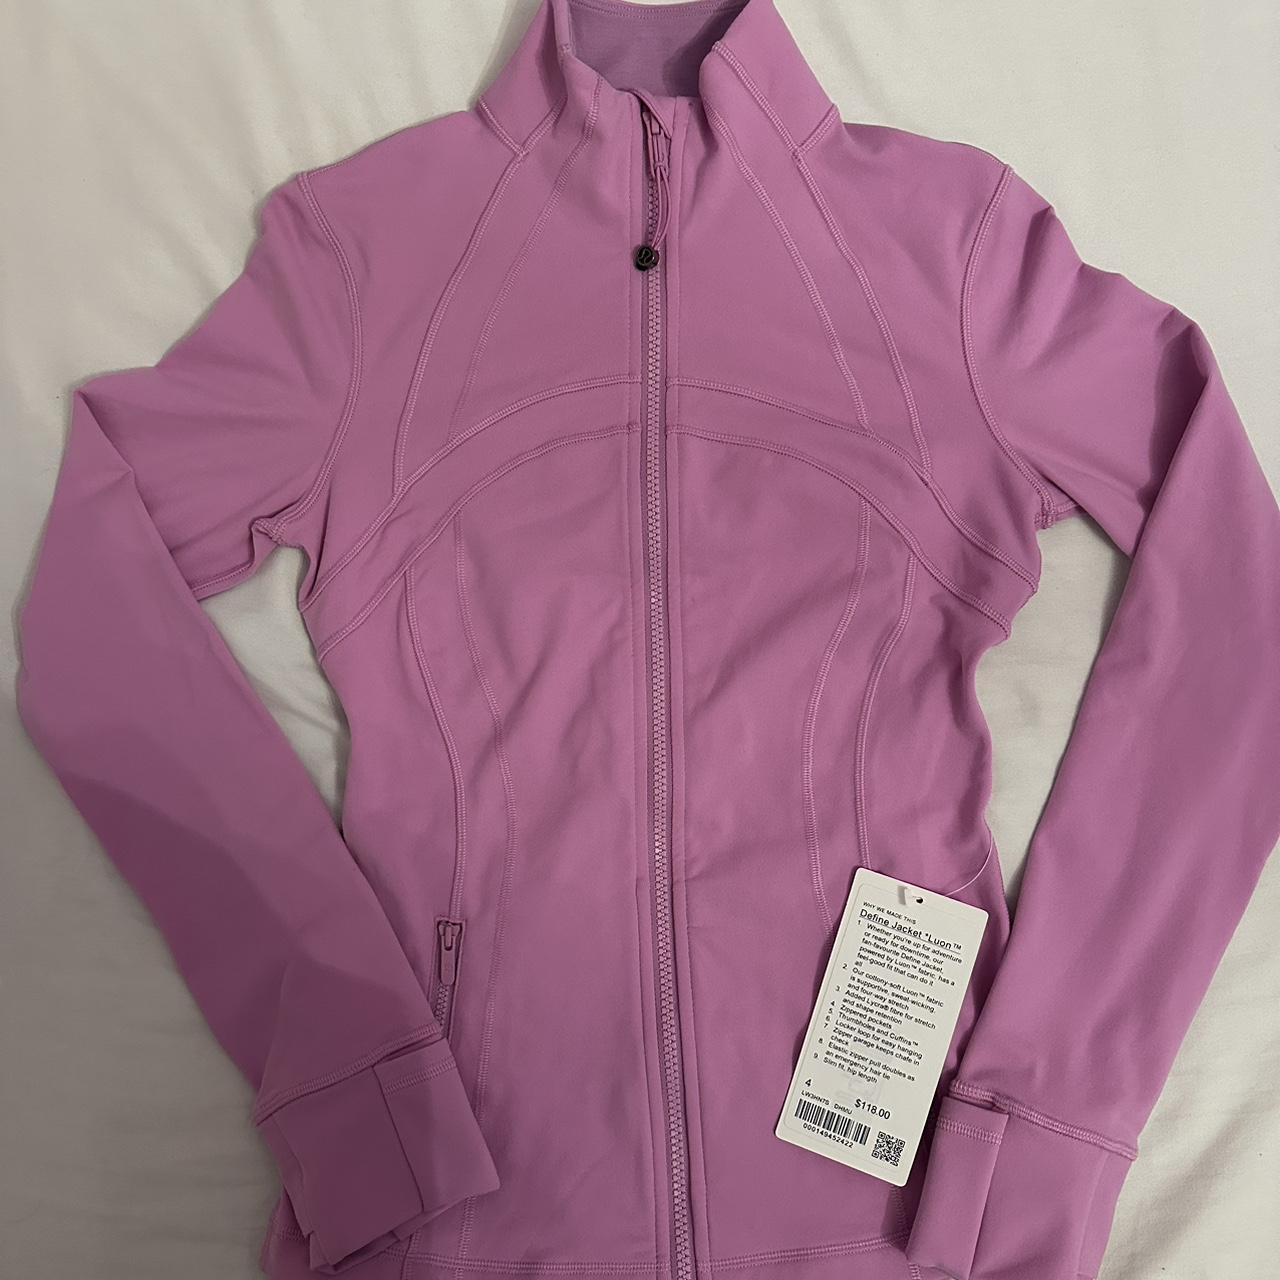 Lululemon Define jacket in dahlia mauve 🩷 BNWT Size... - Depop